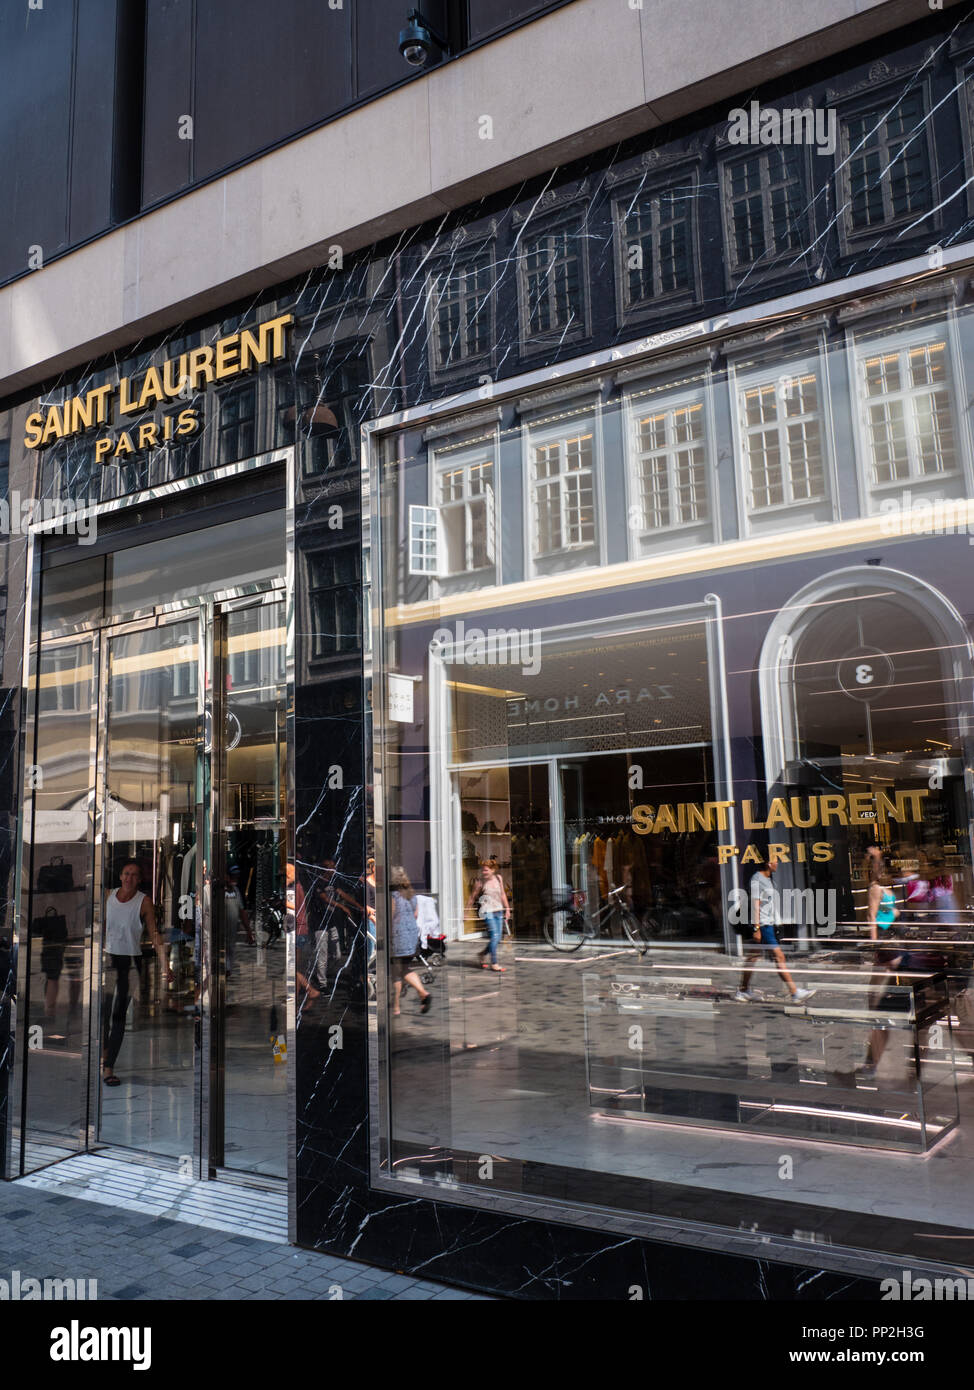 Saint Laurent Paris, Luxury Shop, Copenhagen, Zealand, Denmark